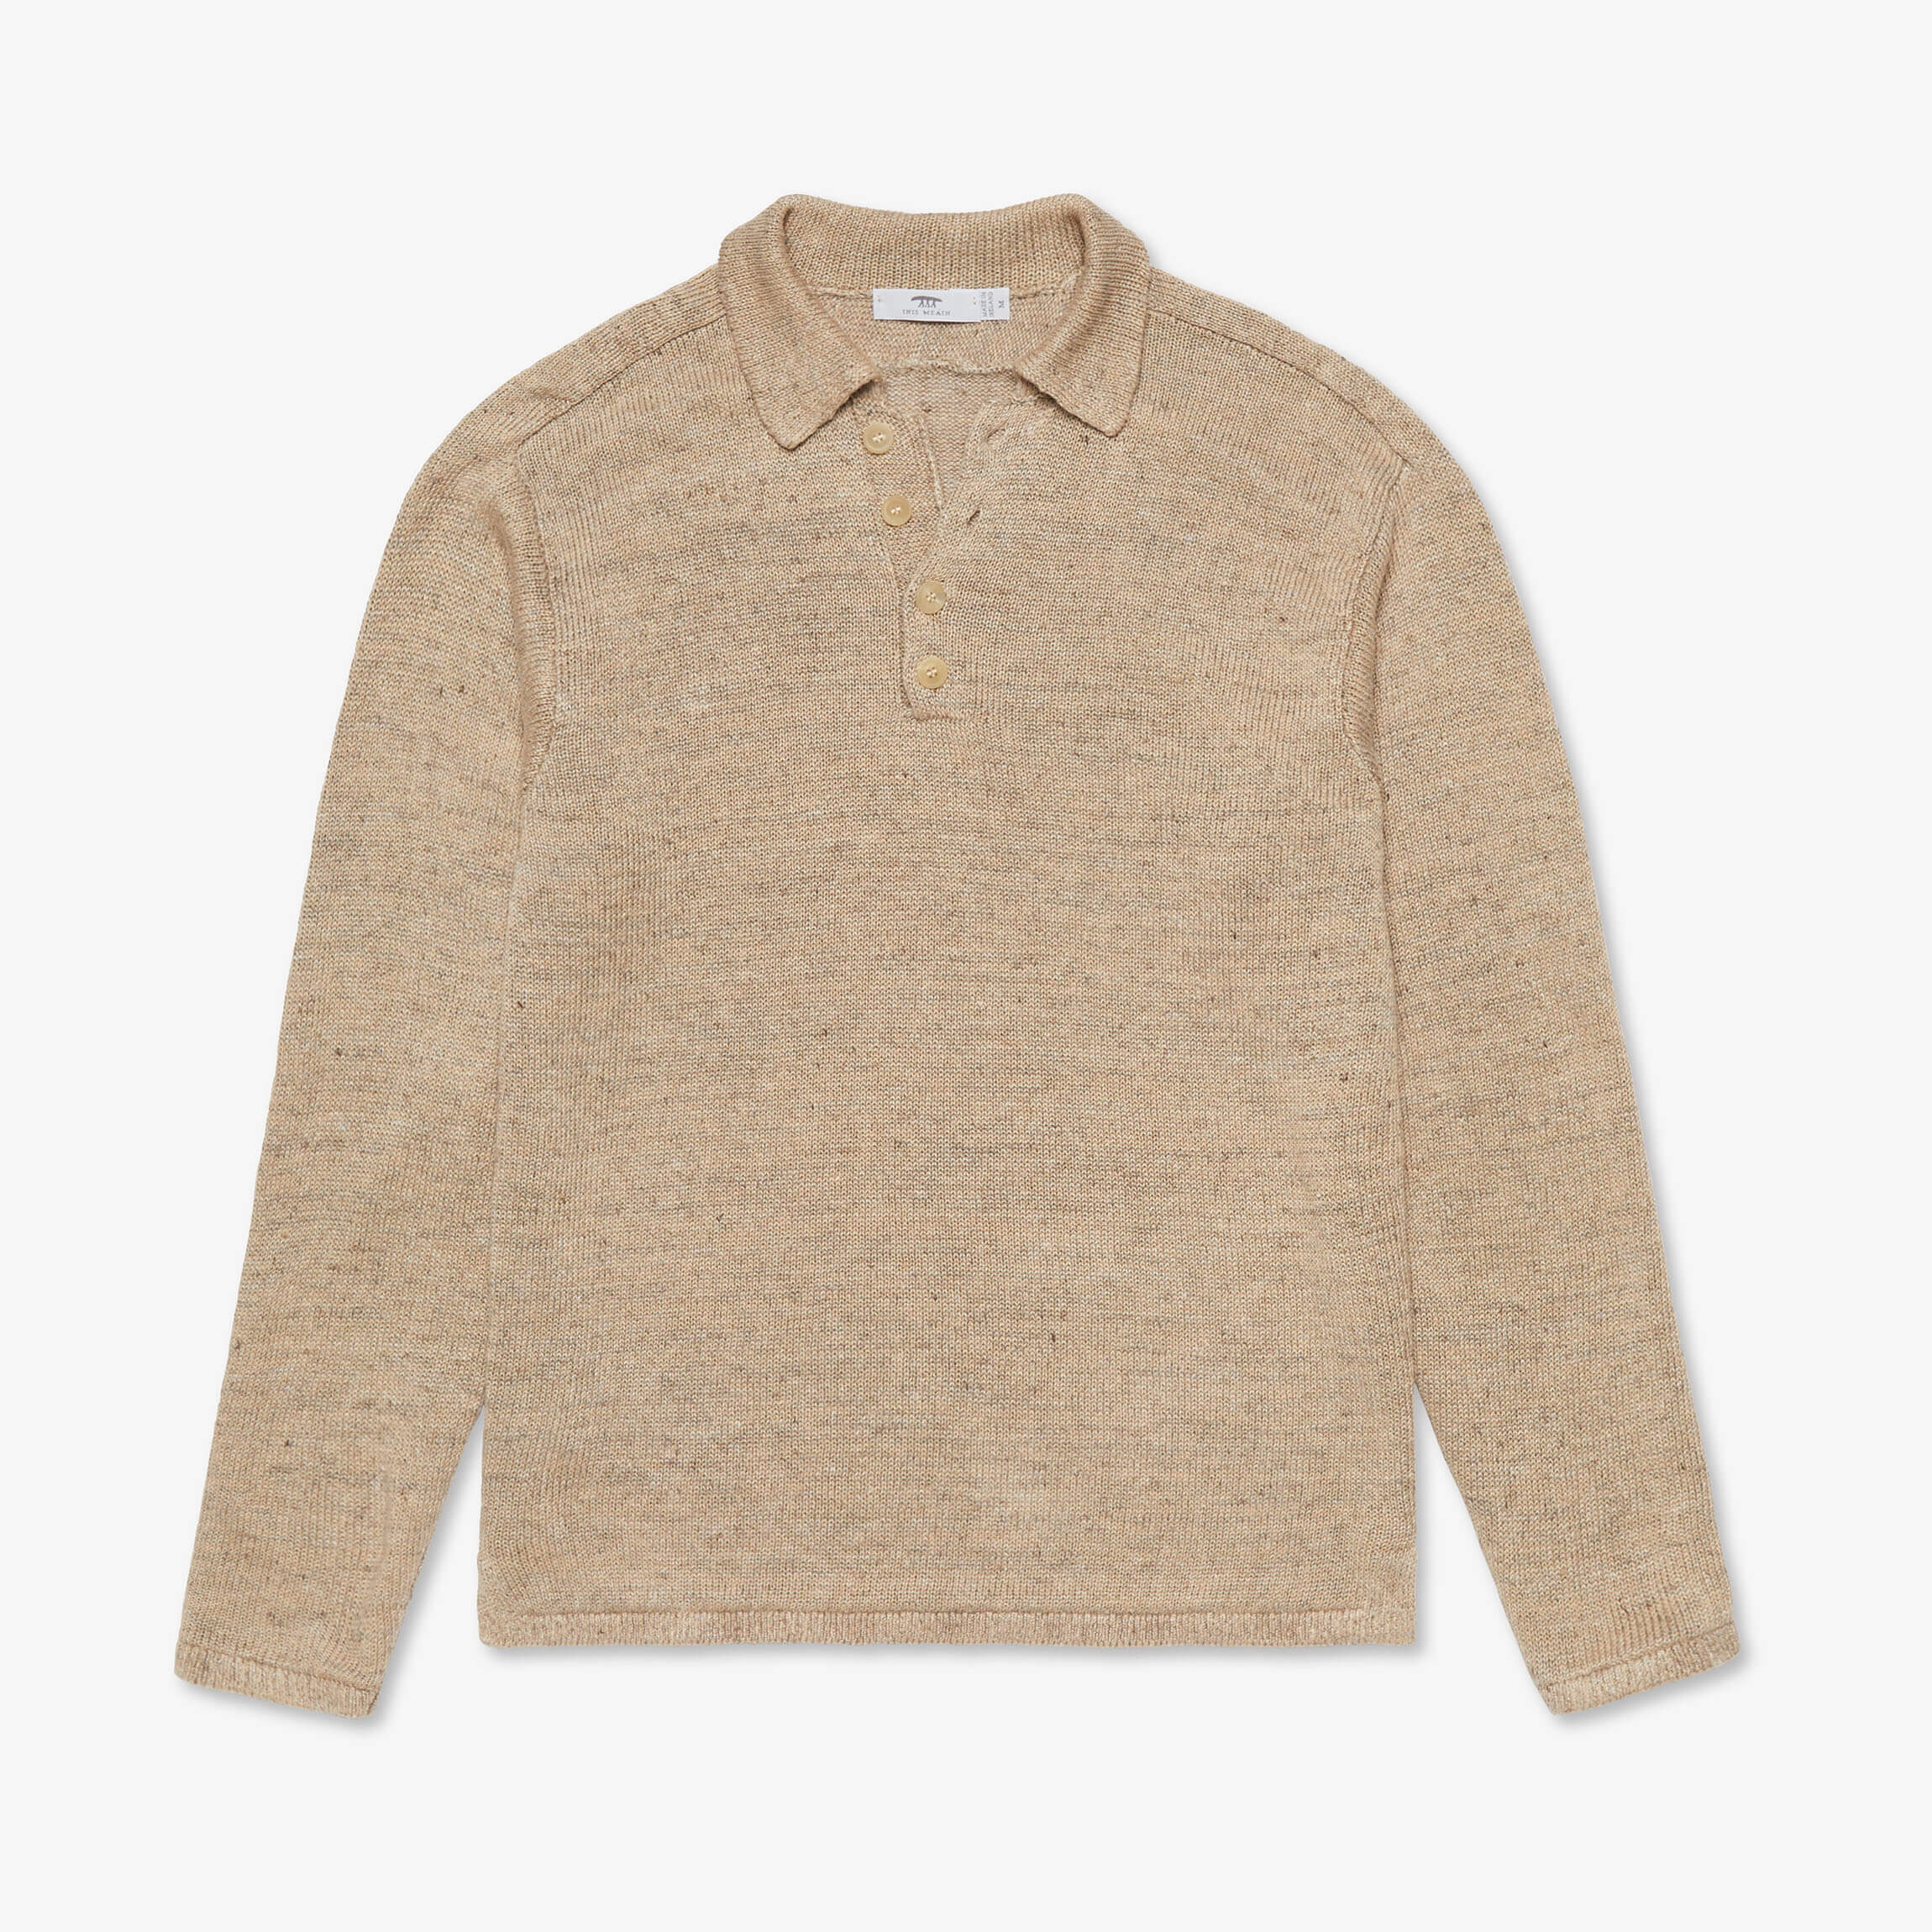 Polo Shirt - Inis Meáin Knitting Co.